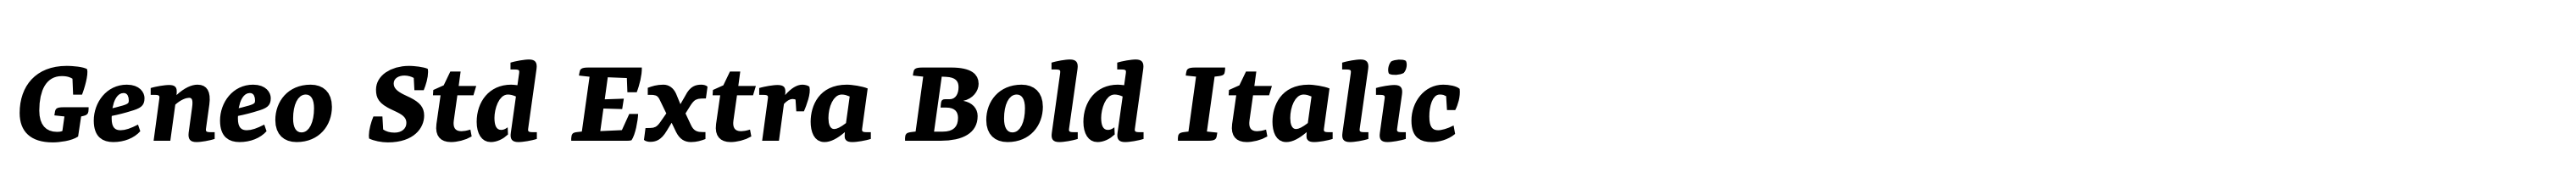 Geneo Std Extra Bold Italic